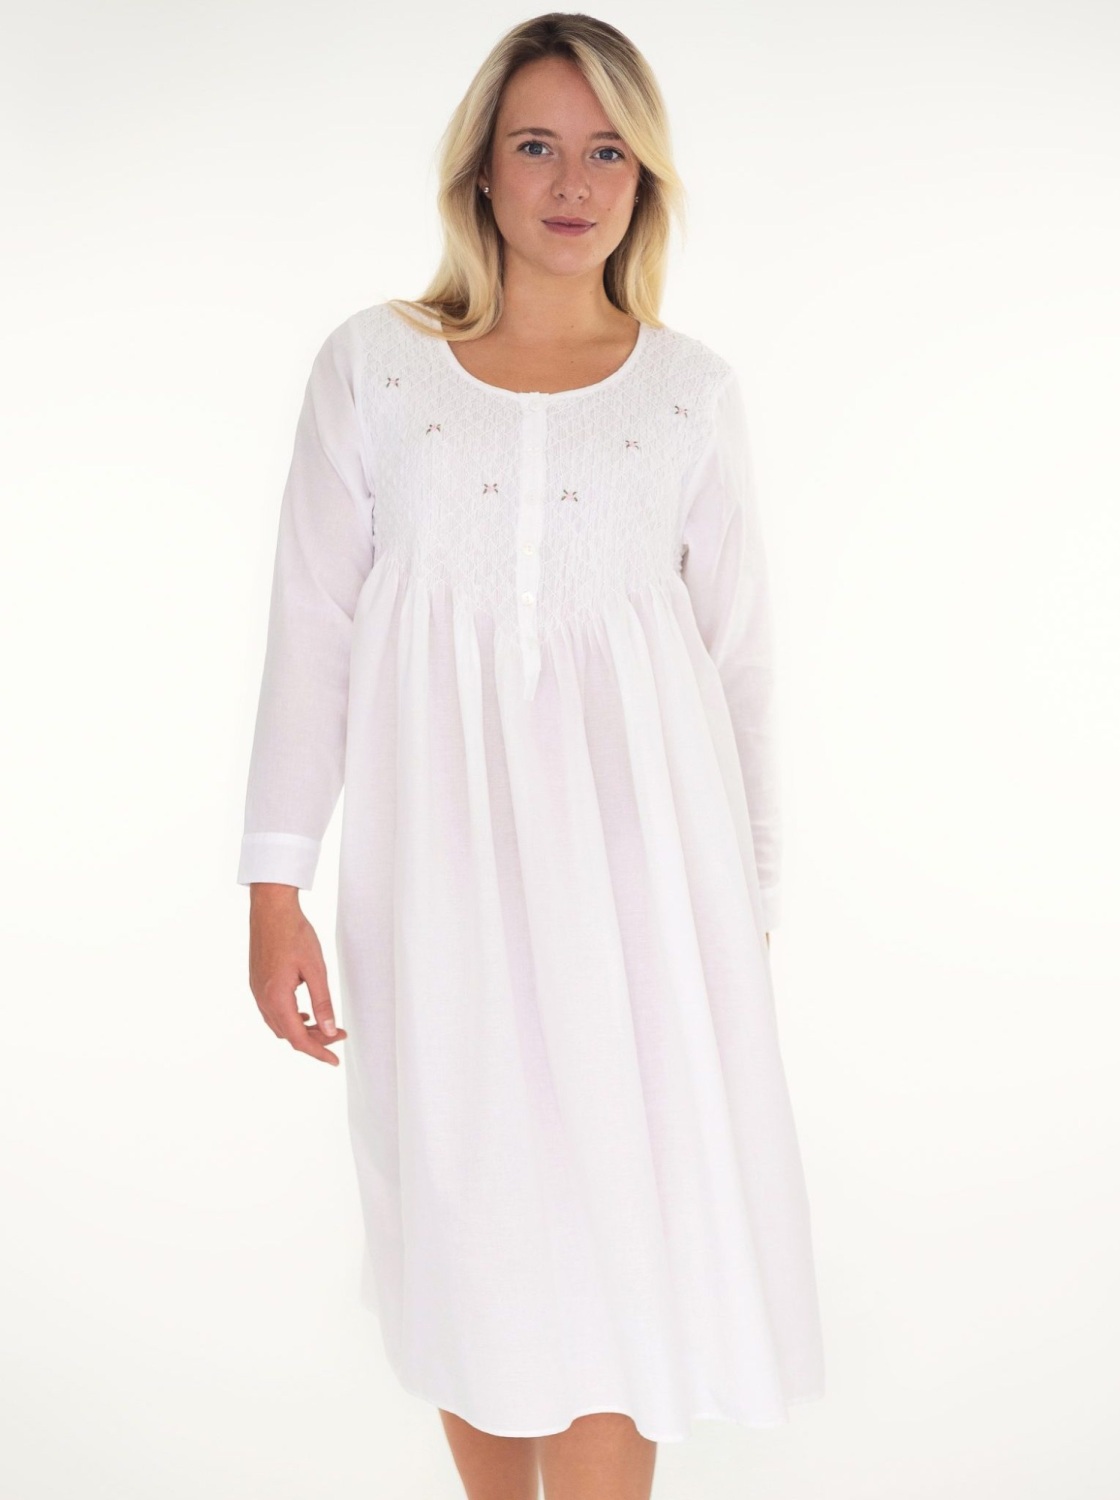 Long Sleeved Cotton Nightdress - Smocked